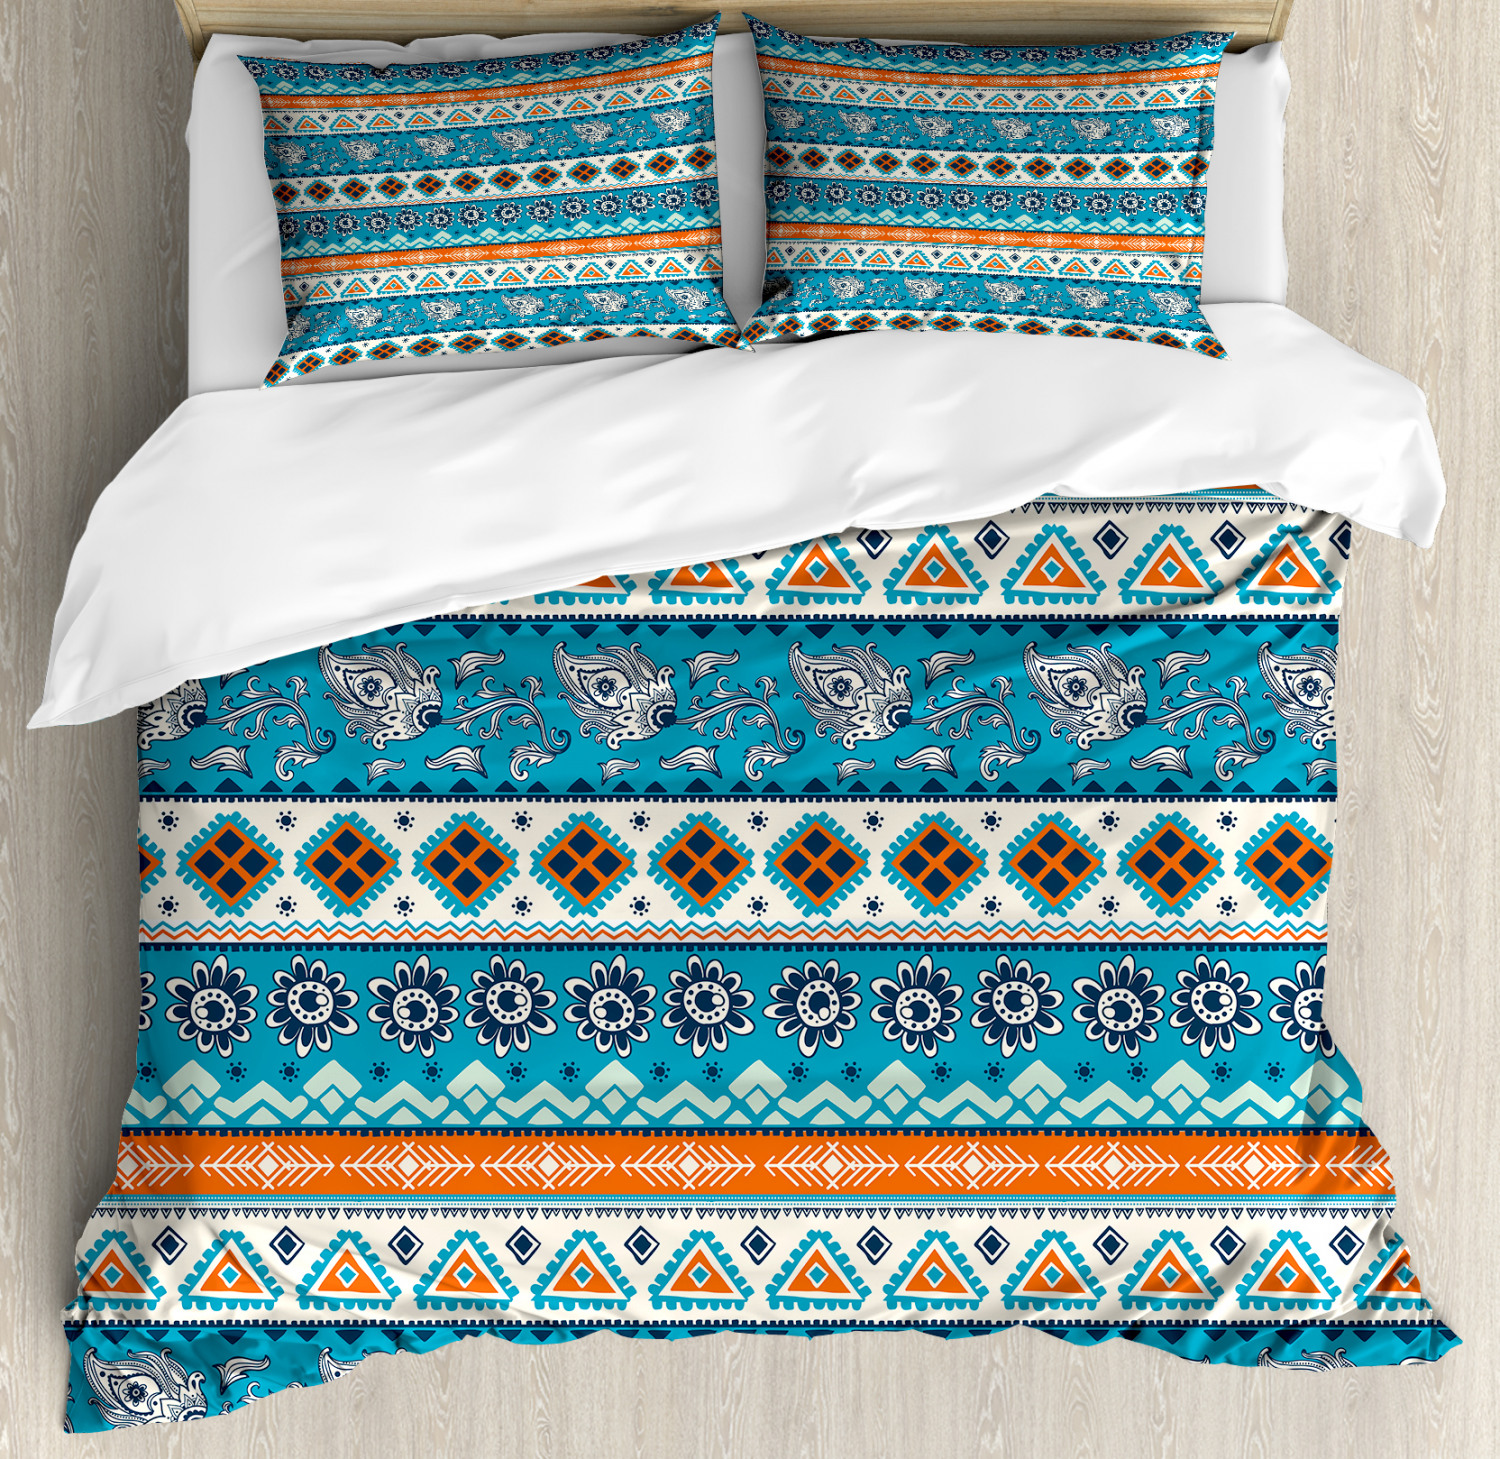 Tribal Duvet Cover Set With Pillow Shams Floral Aztec Art Pattern